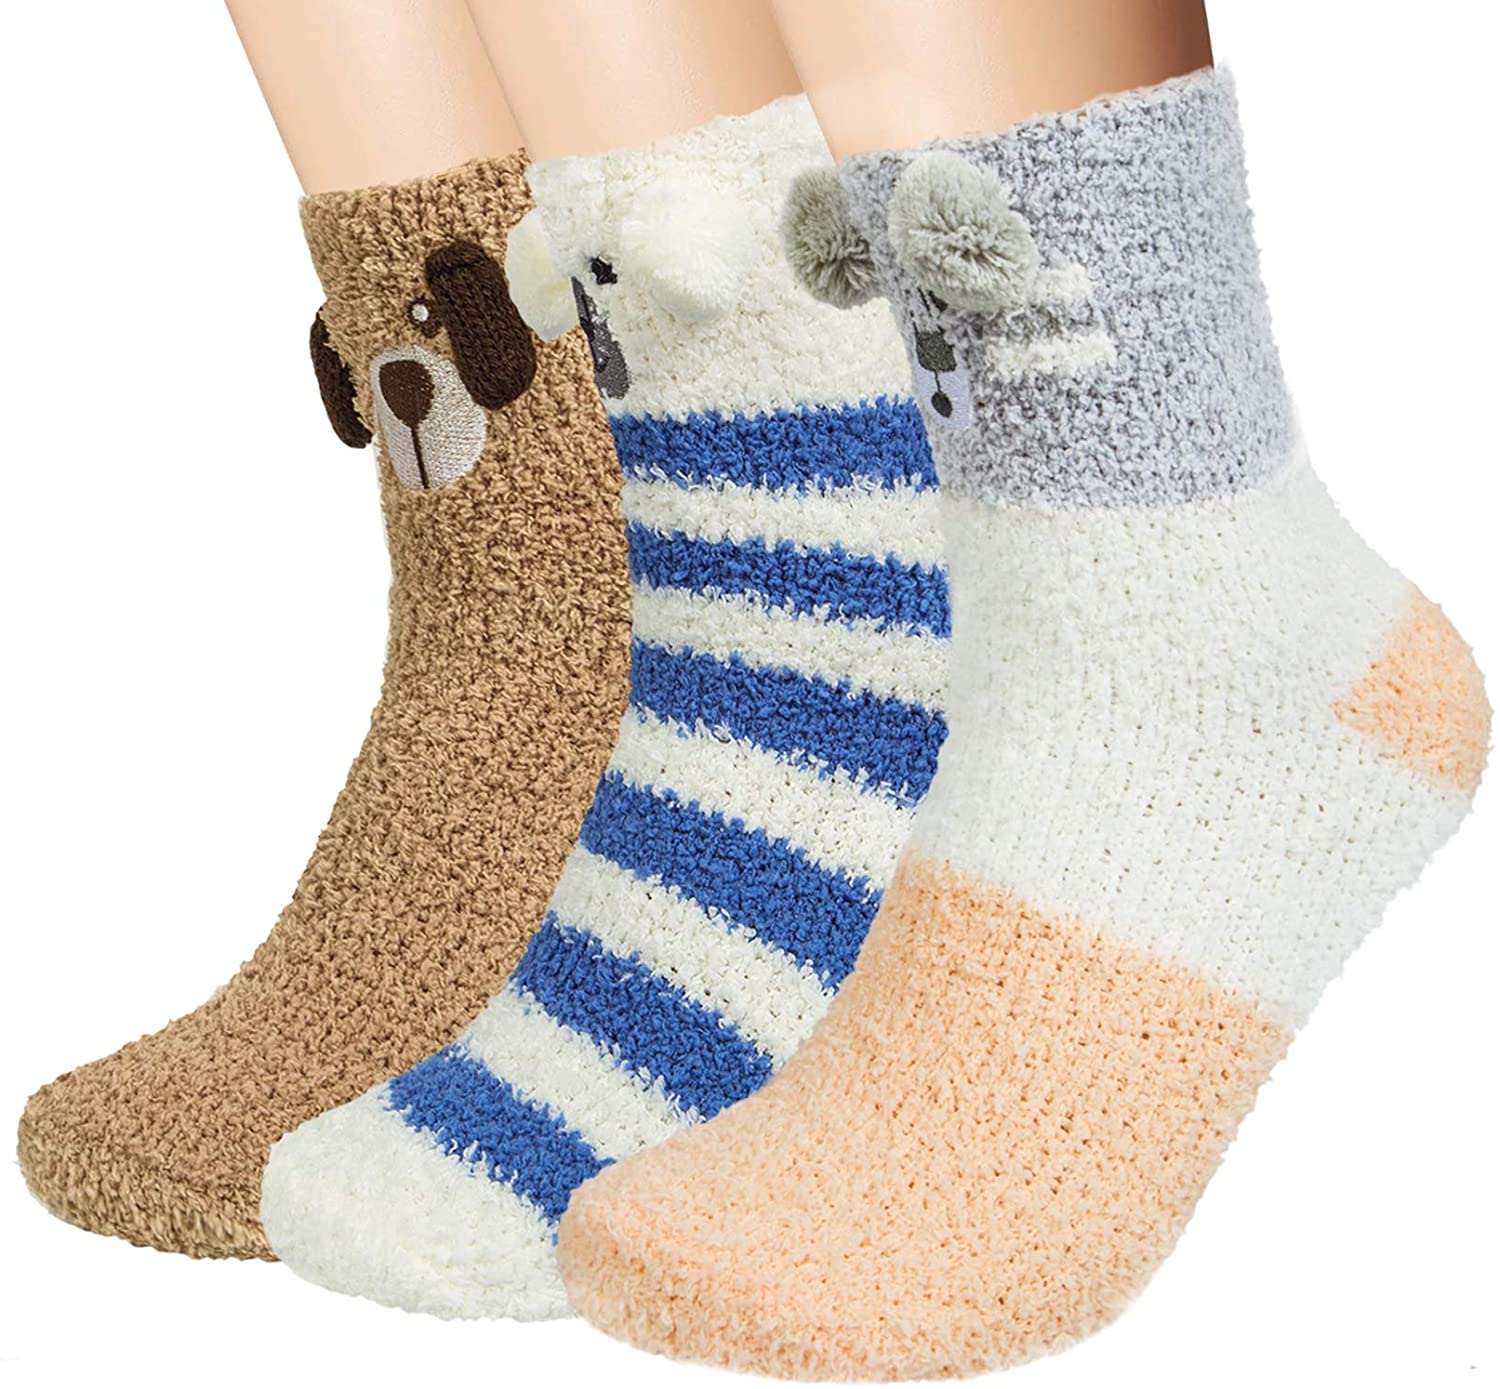 Xuzirui 5 Pairs Women Warm Fuzzy Fluffy Socks Super Soft Cozy Home Slipper Socks